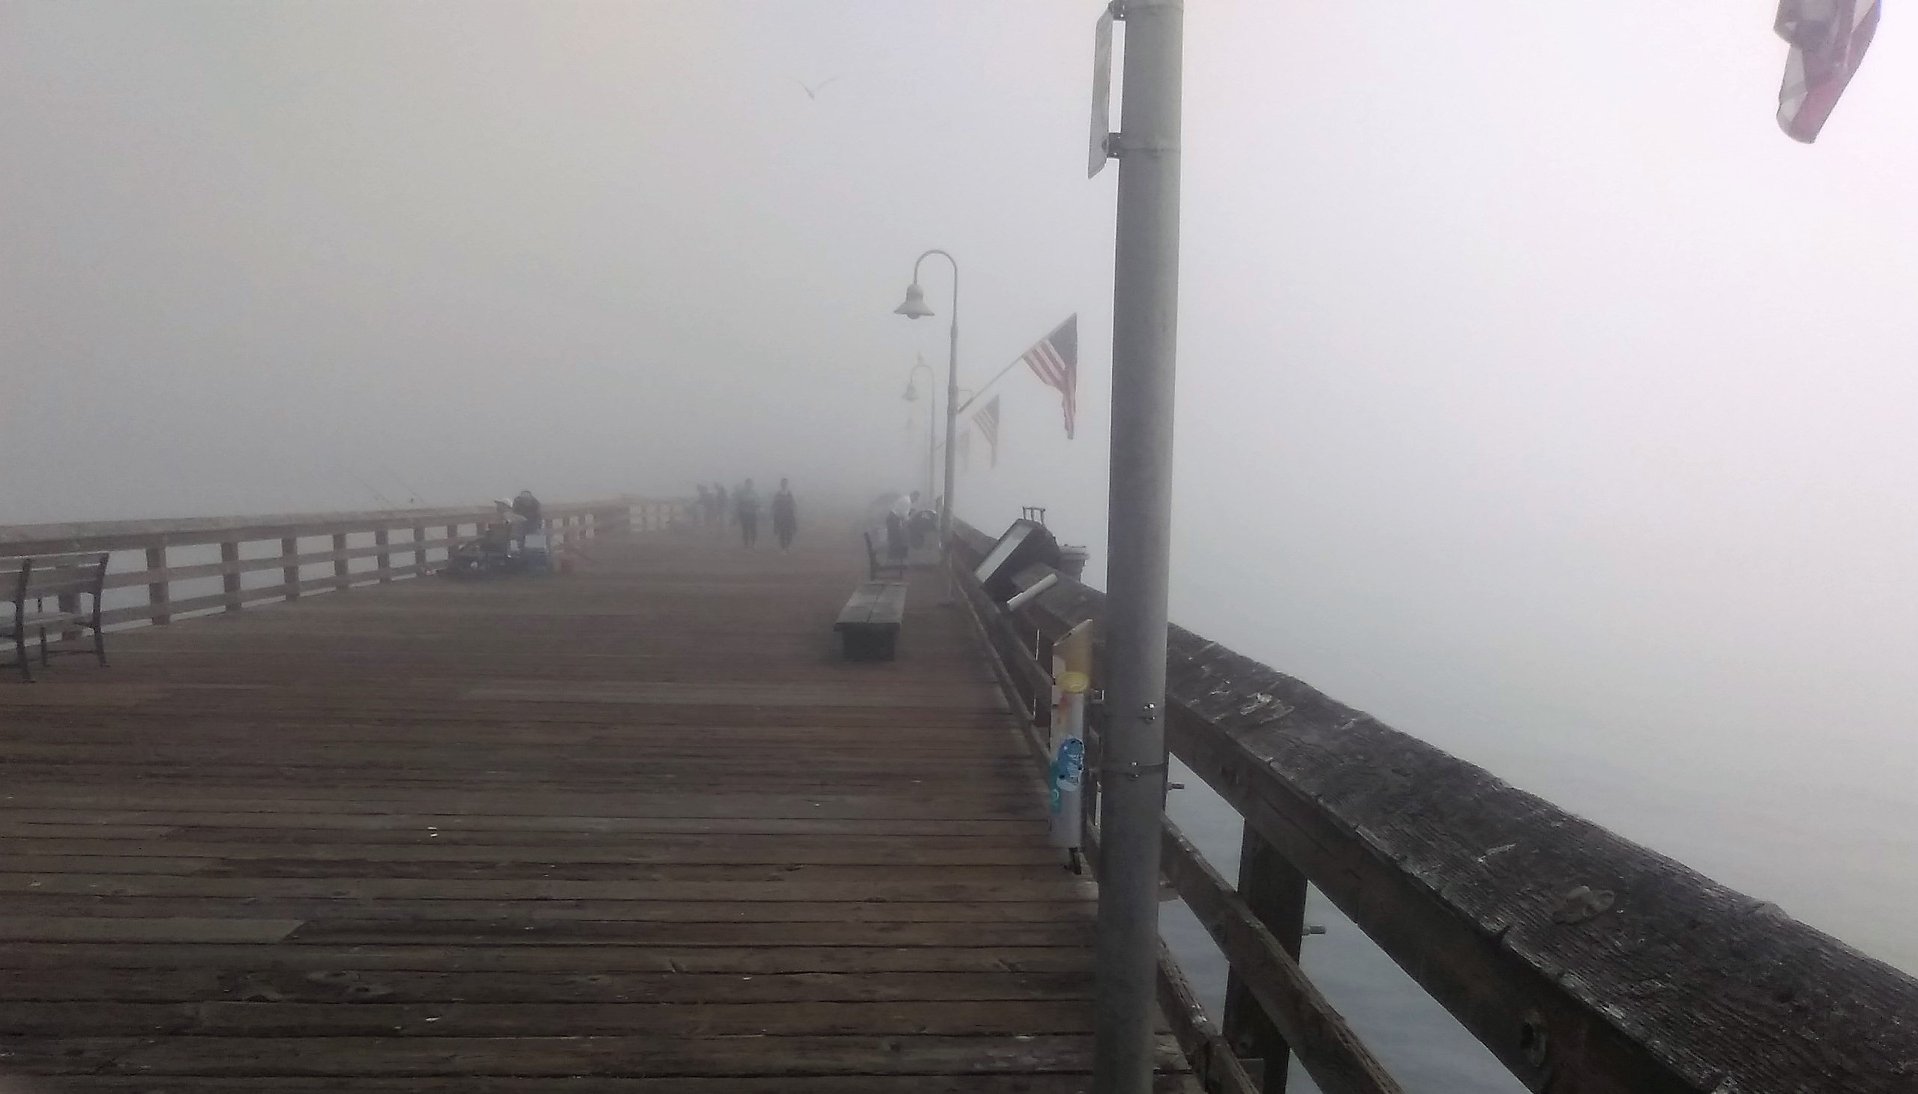 The fog rolls in...